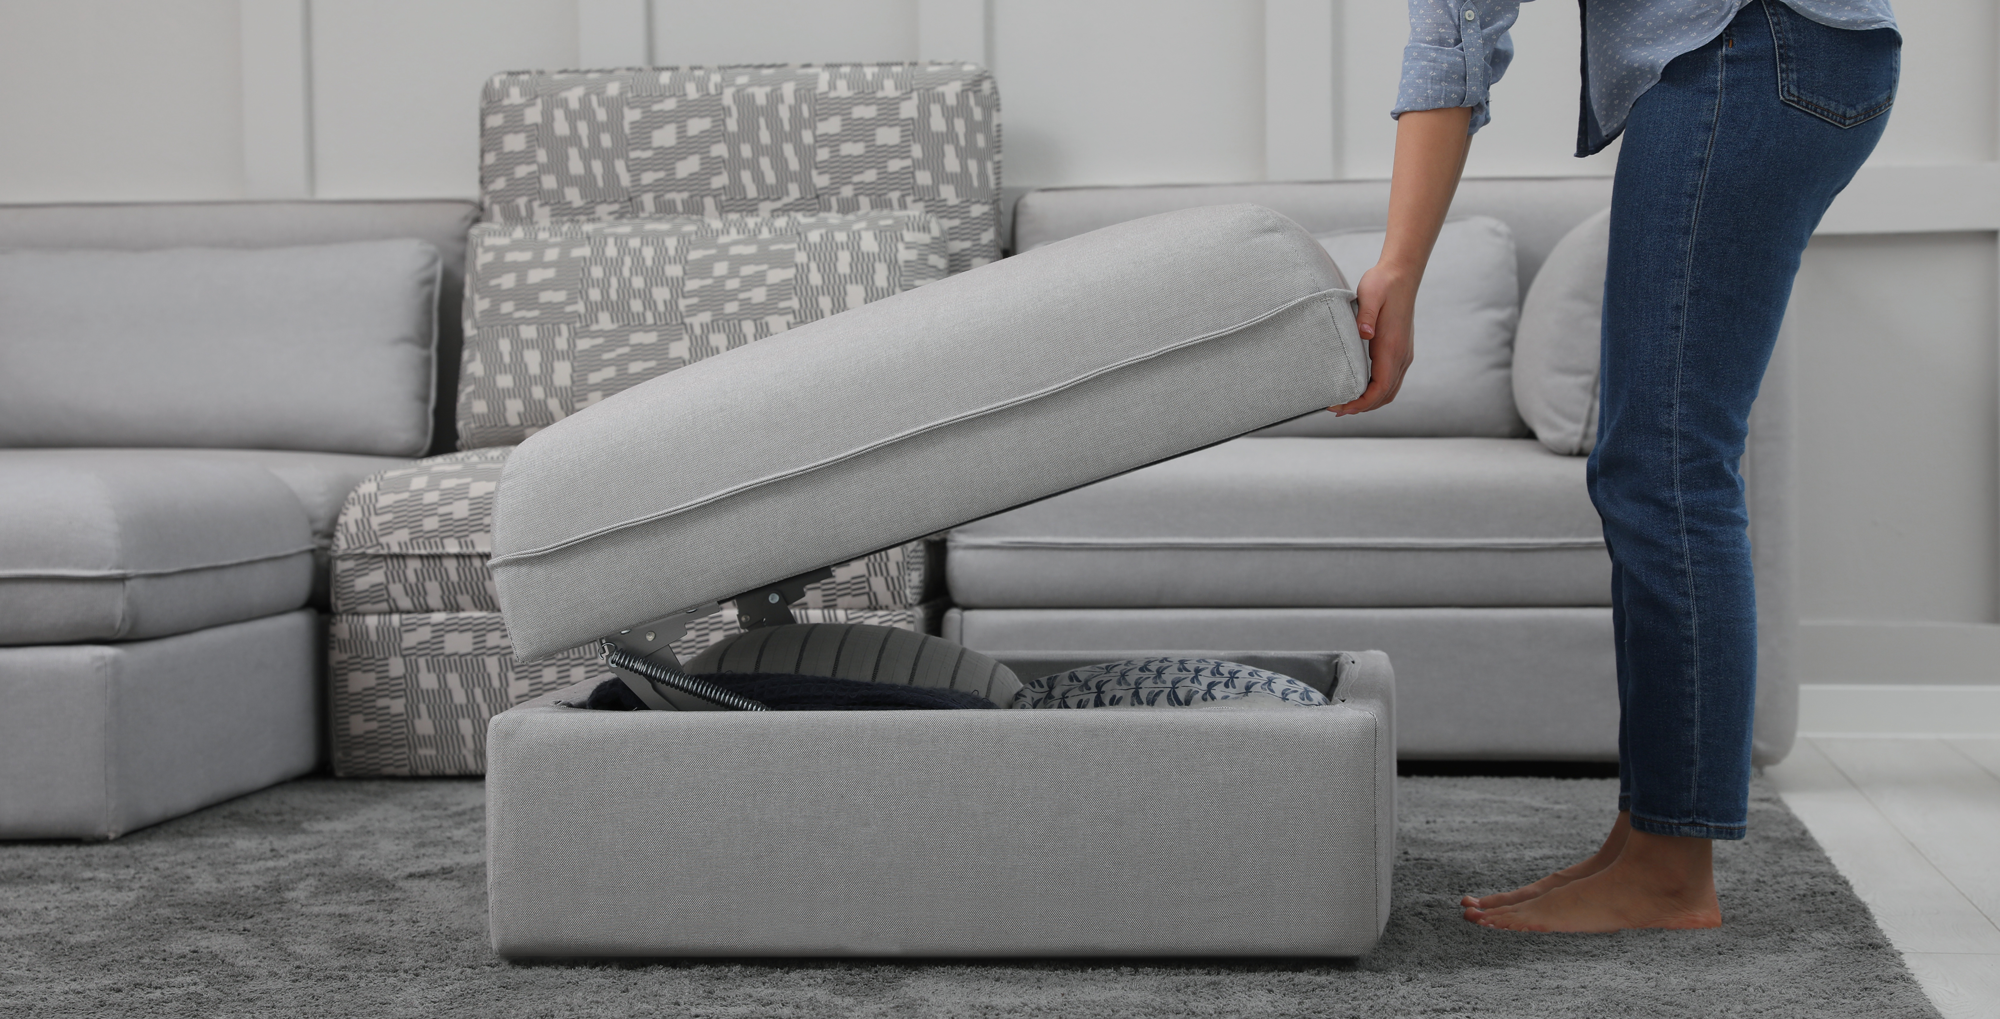 What is Modular Furniture Design?